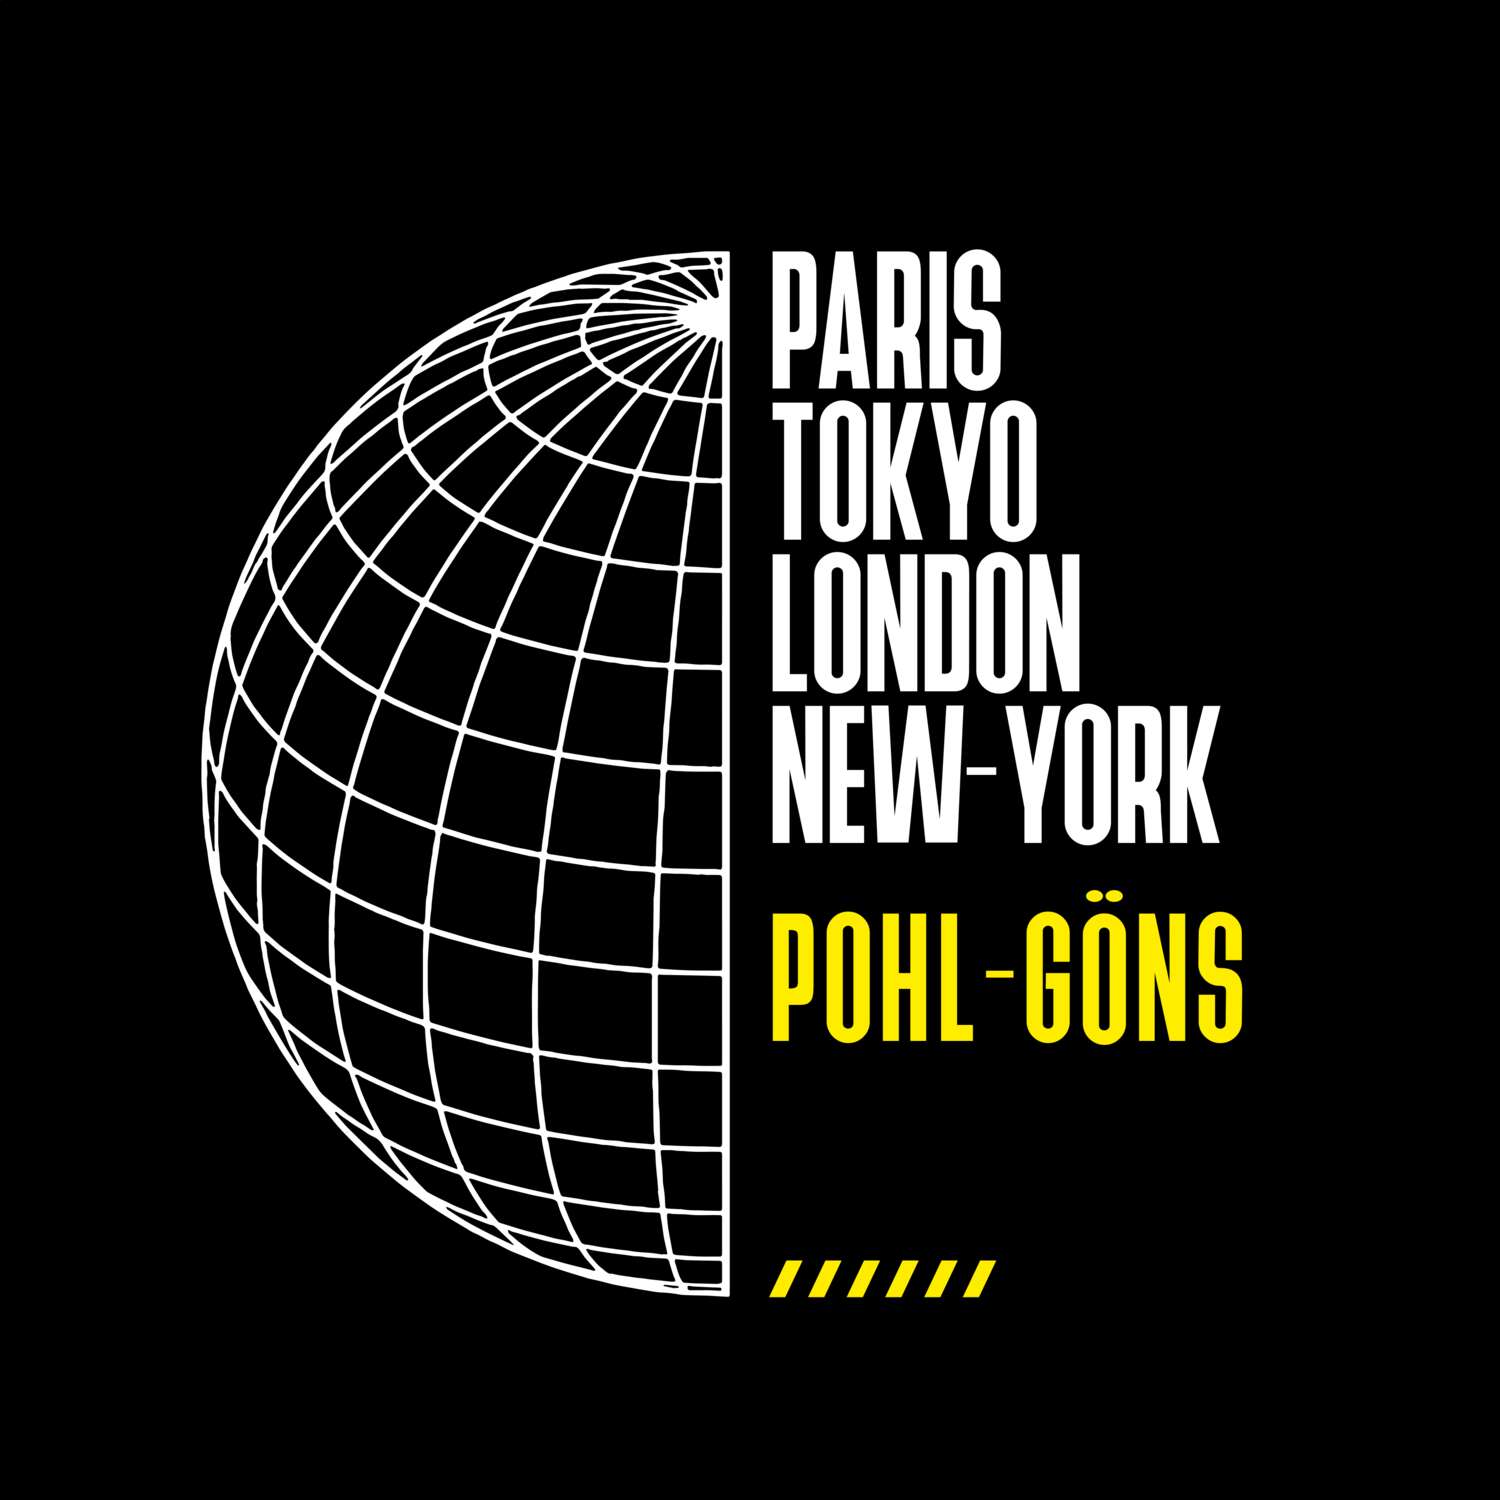 Pohl-Göns T-Shirt »Paris Tokyo London«